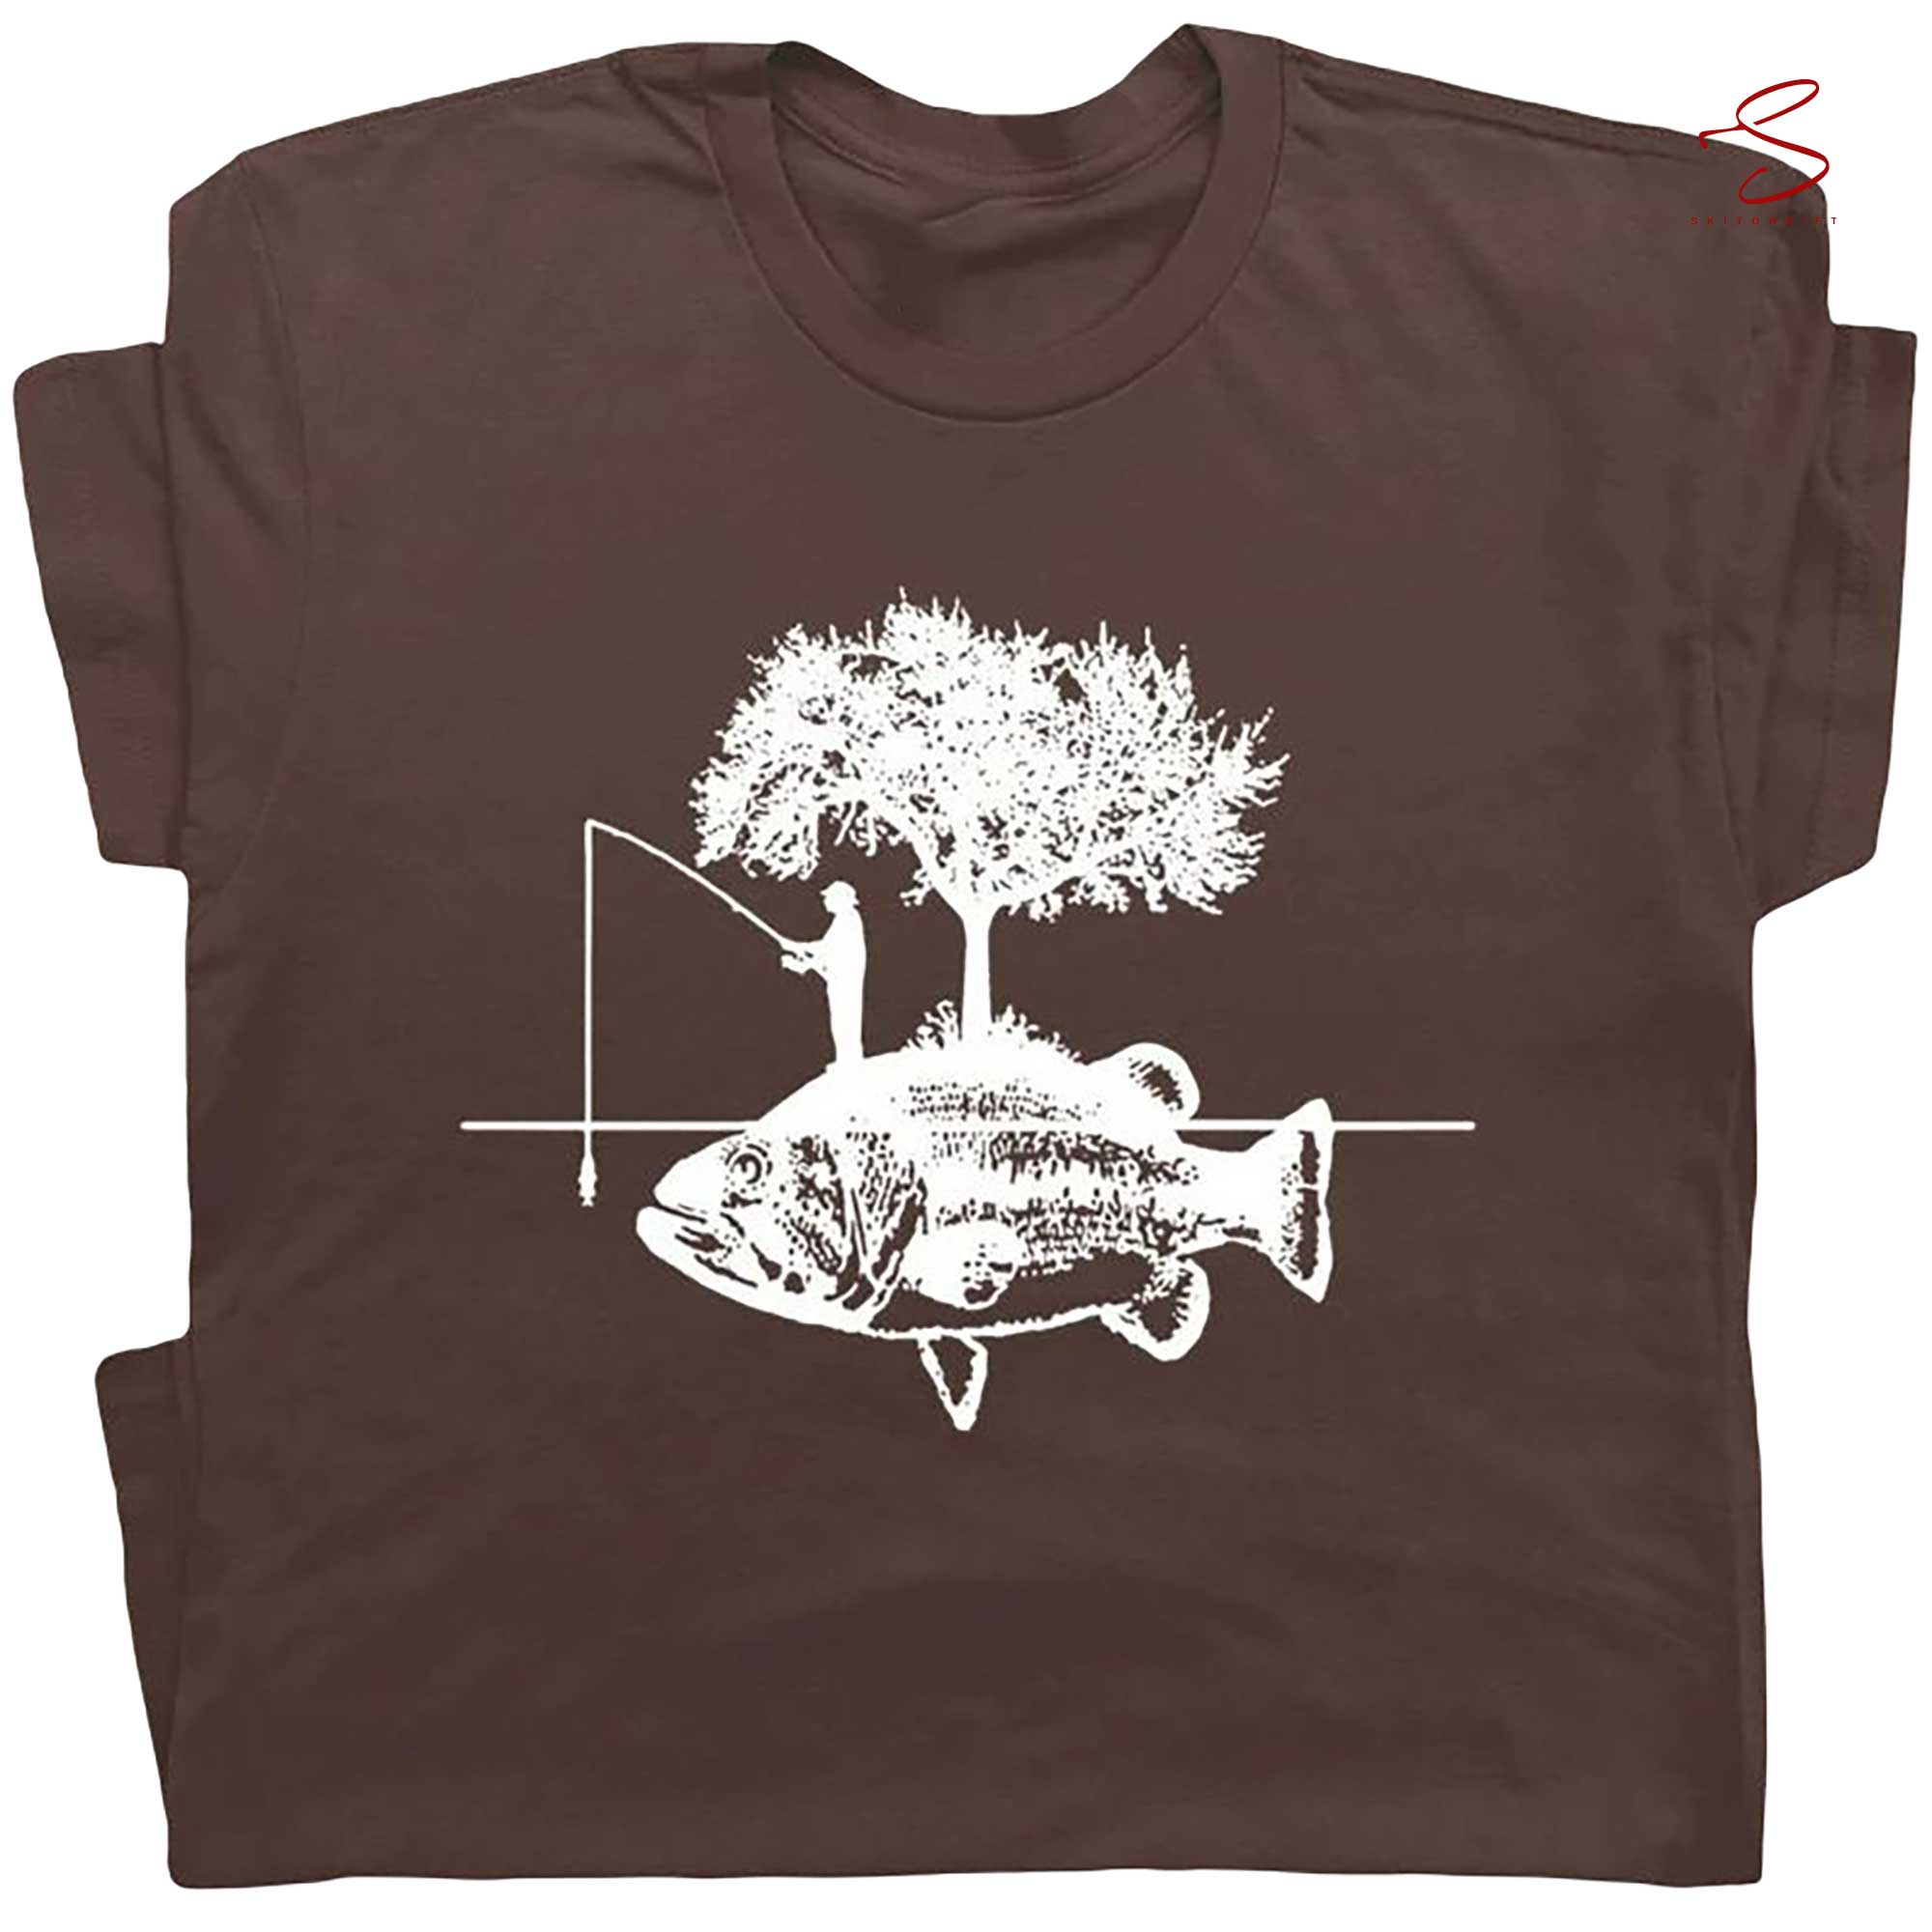 Skitongift Fishing Tshirt Fisherman Shirts Funny Fishing Graphic Tees